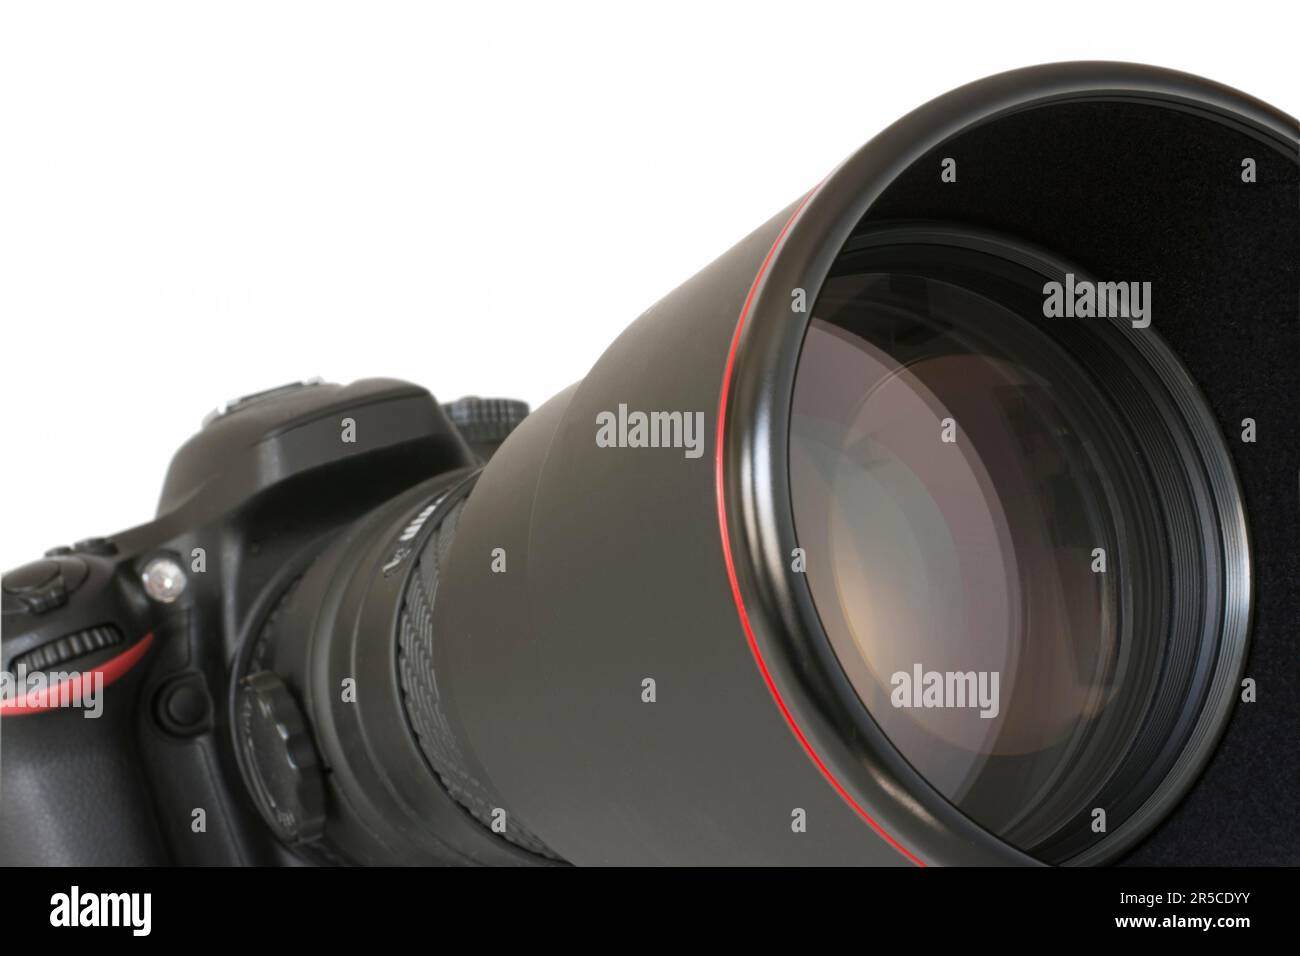 Isolated digital slr camera with telephoto lens Stock Photo